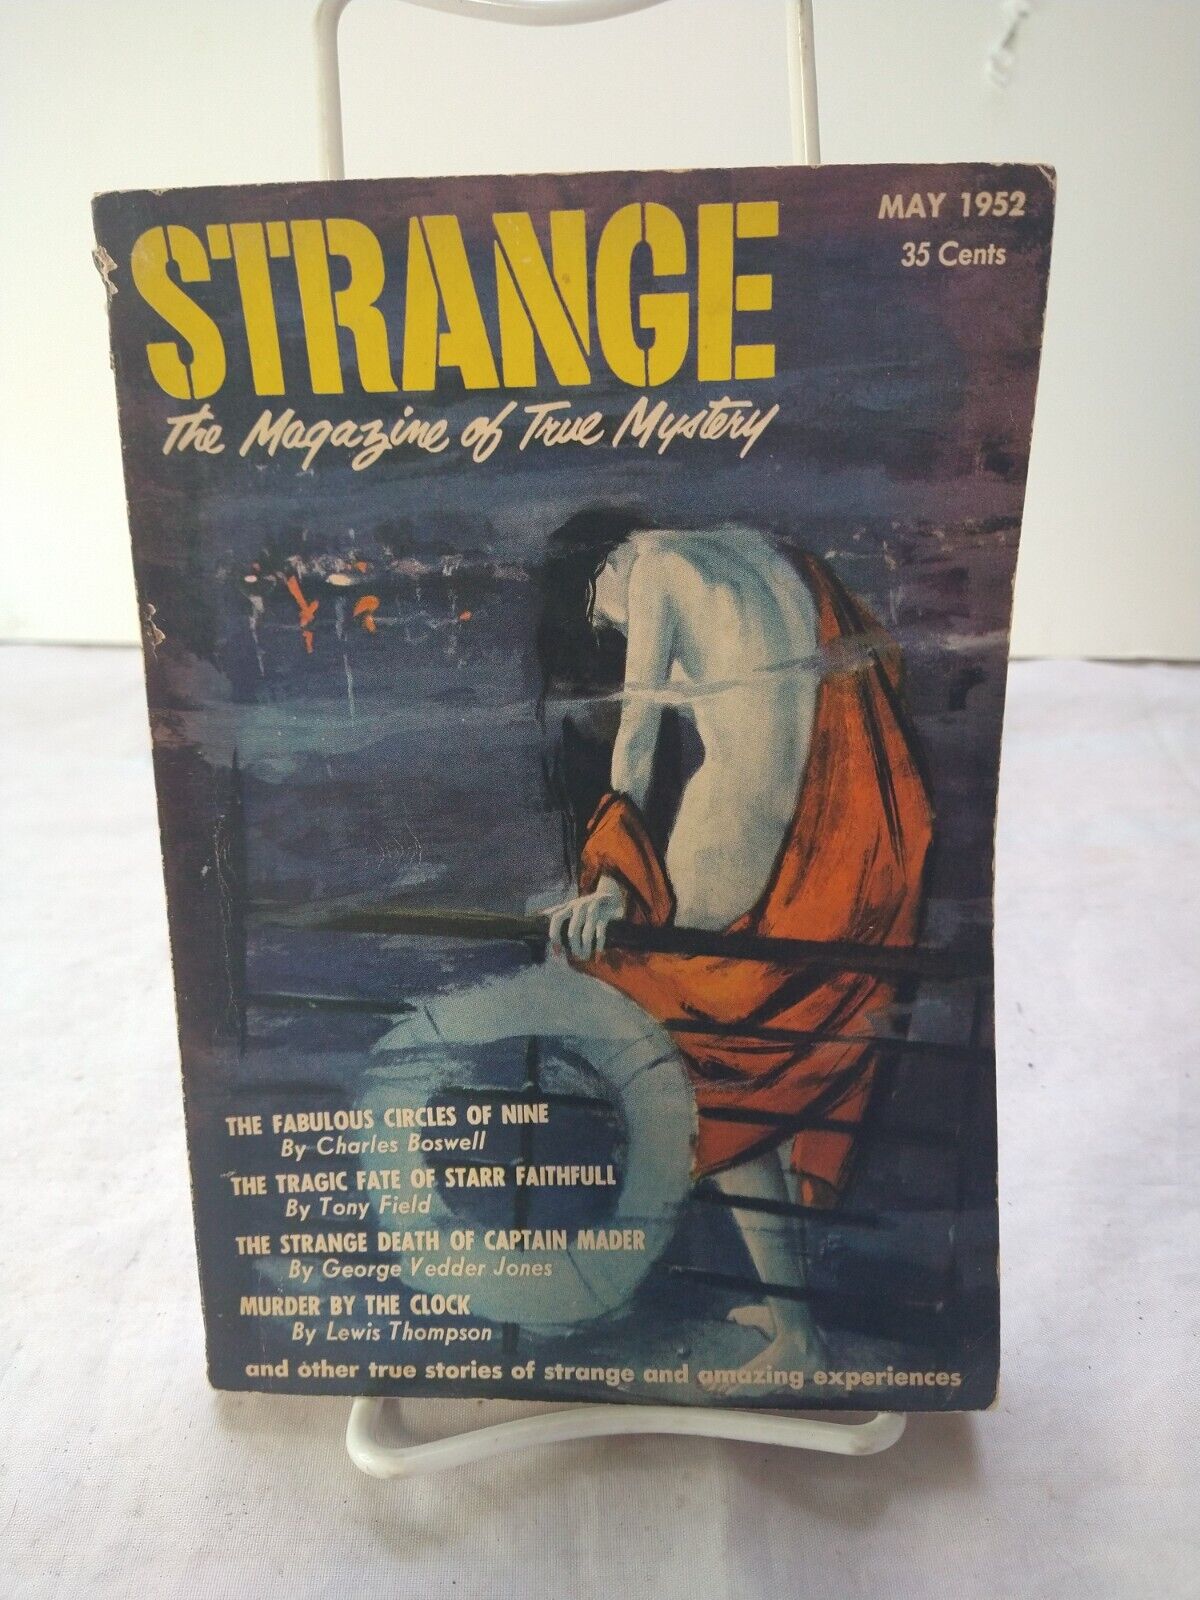 Strange The Magazine of True Mystery Digest #2 May 1952